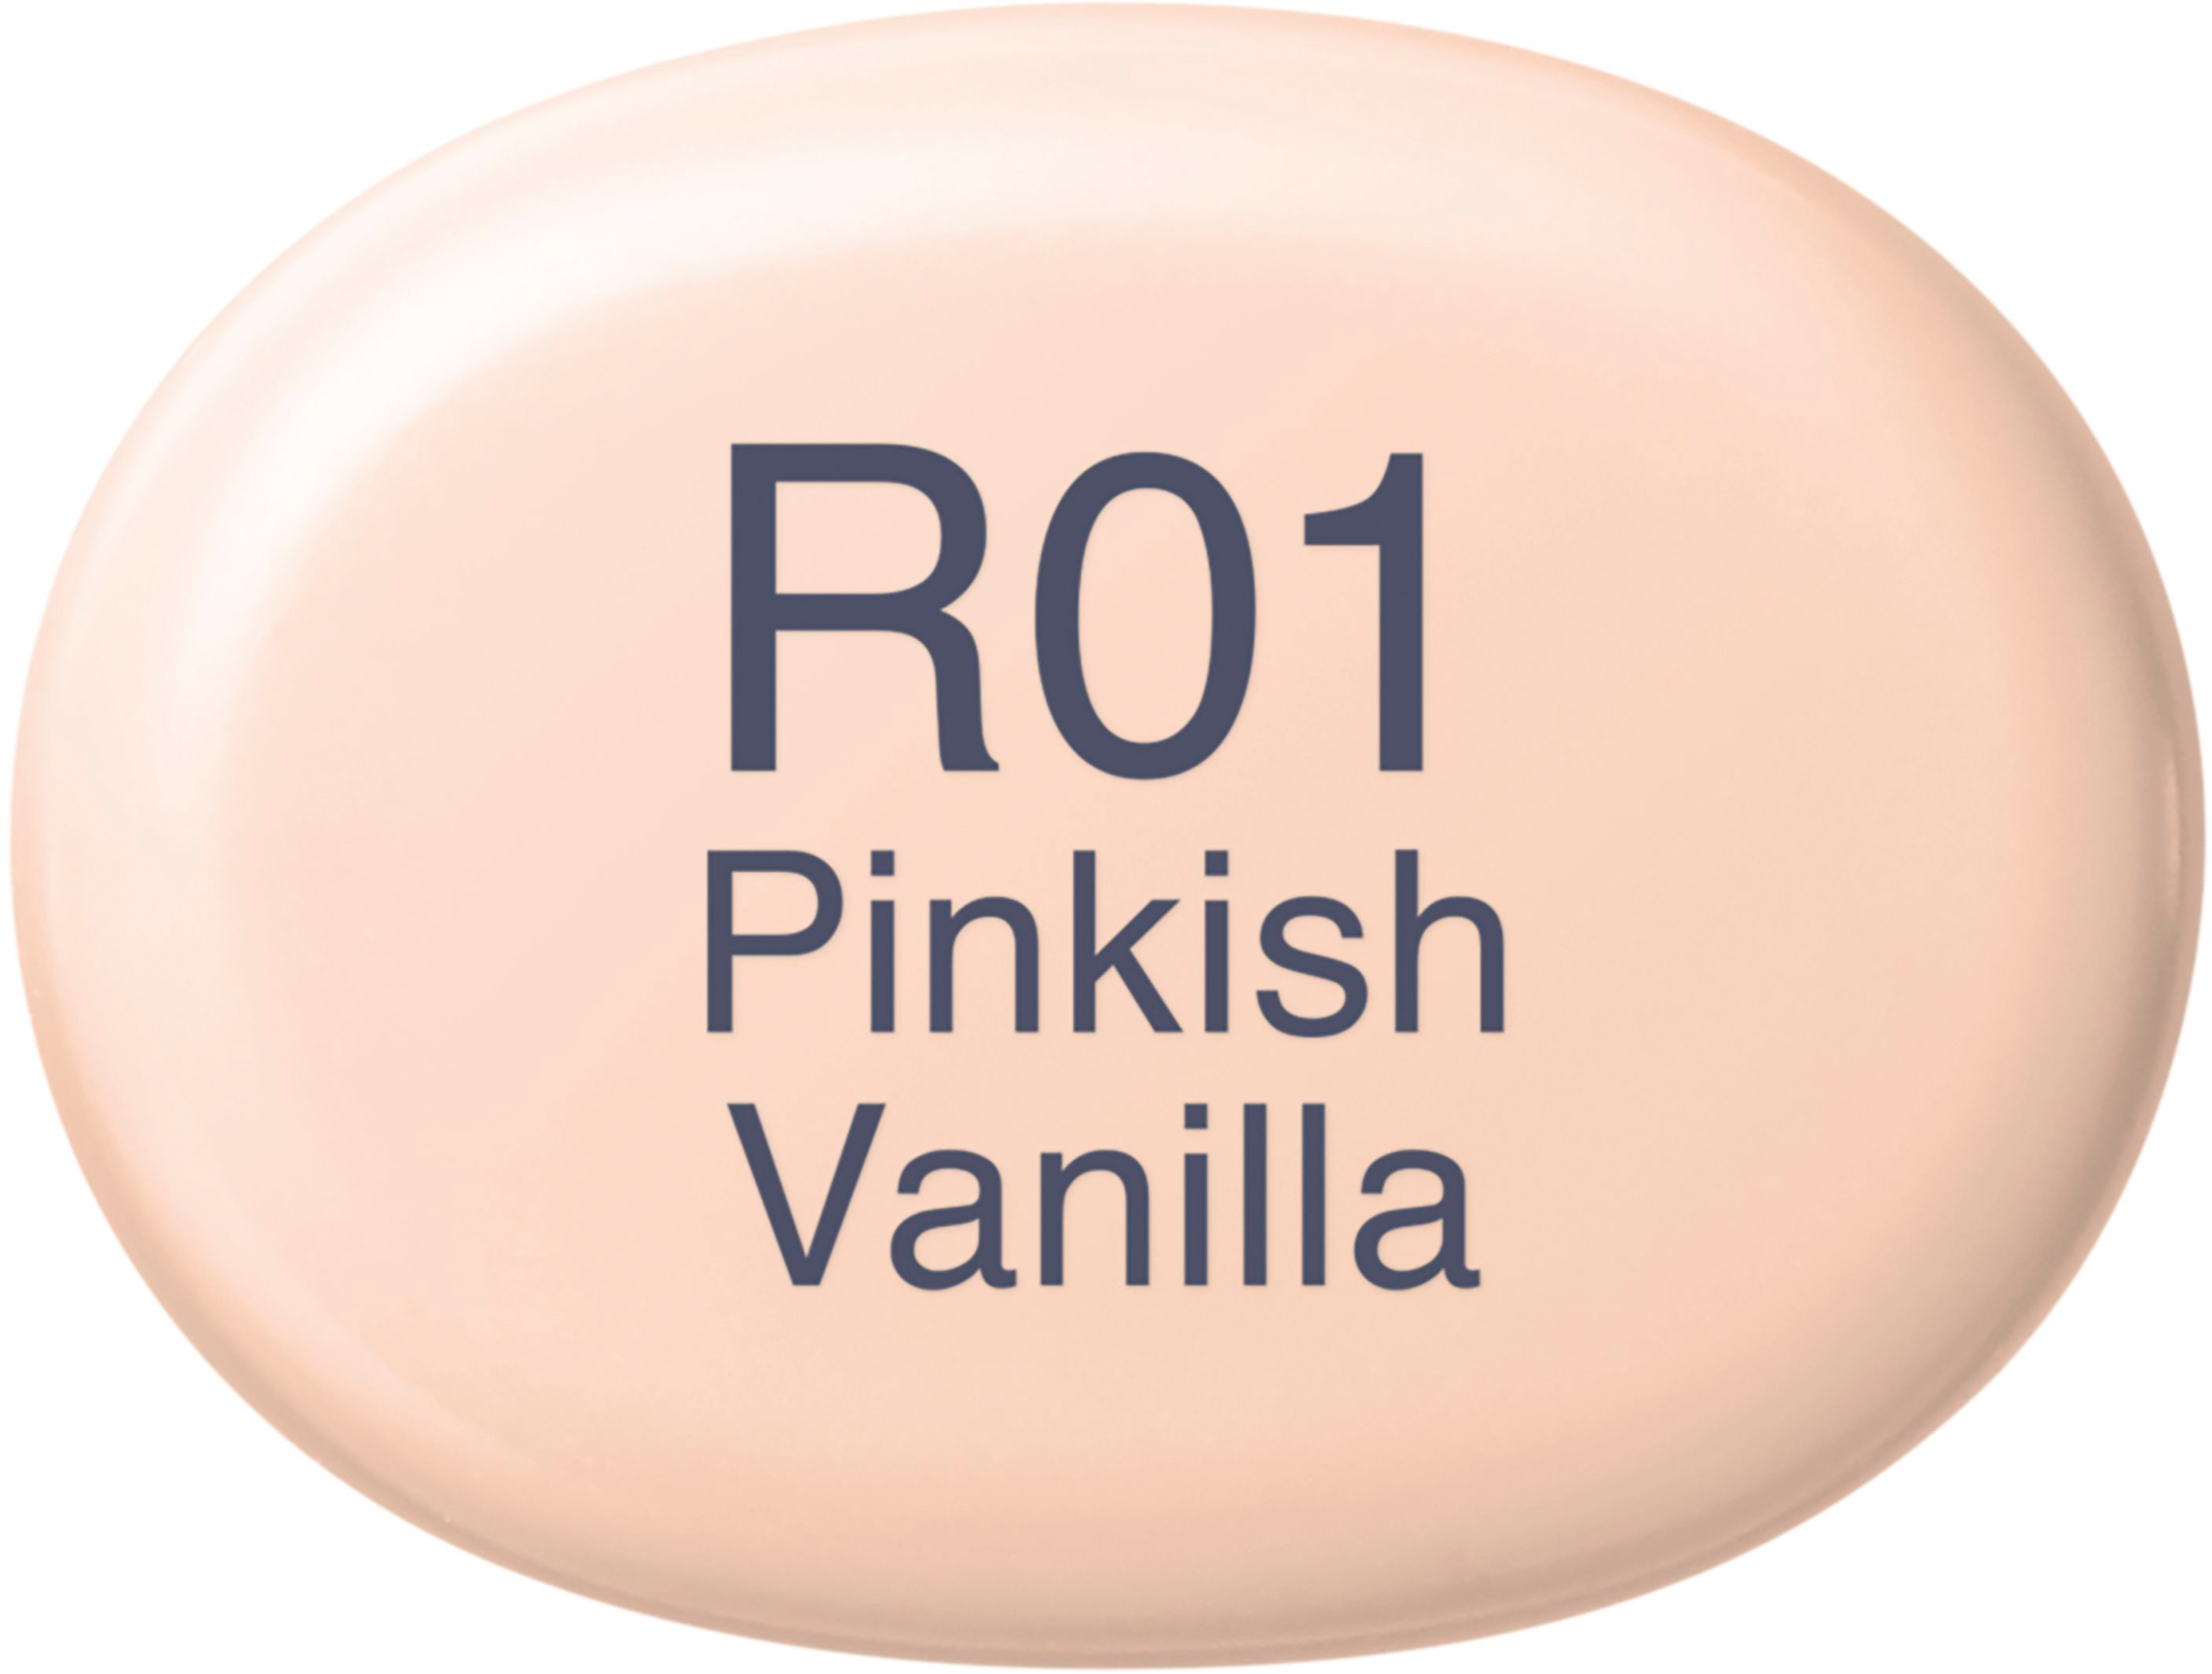 COPIC Marker Sketch 21075281 R01 - Pinkish Vanilla